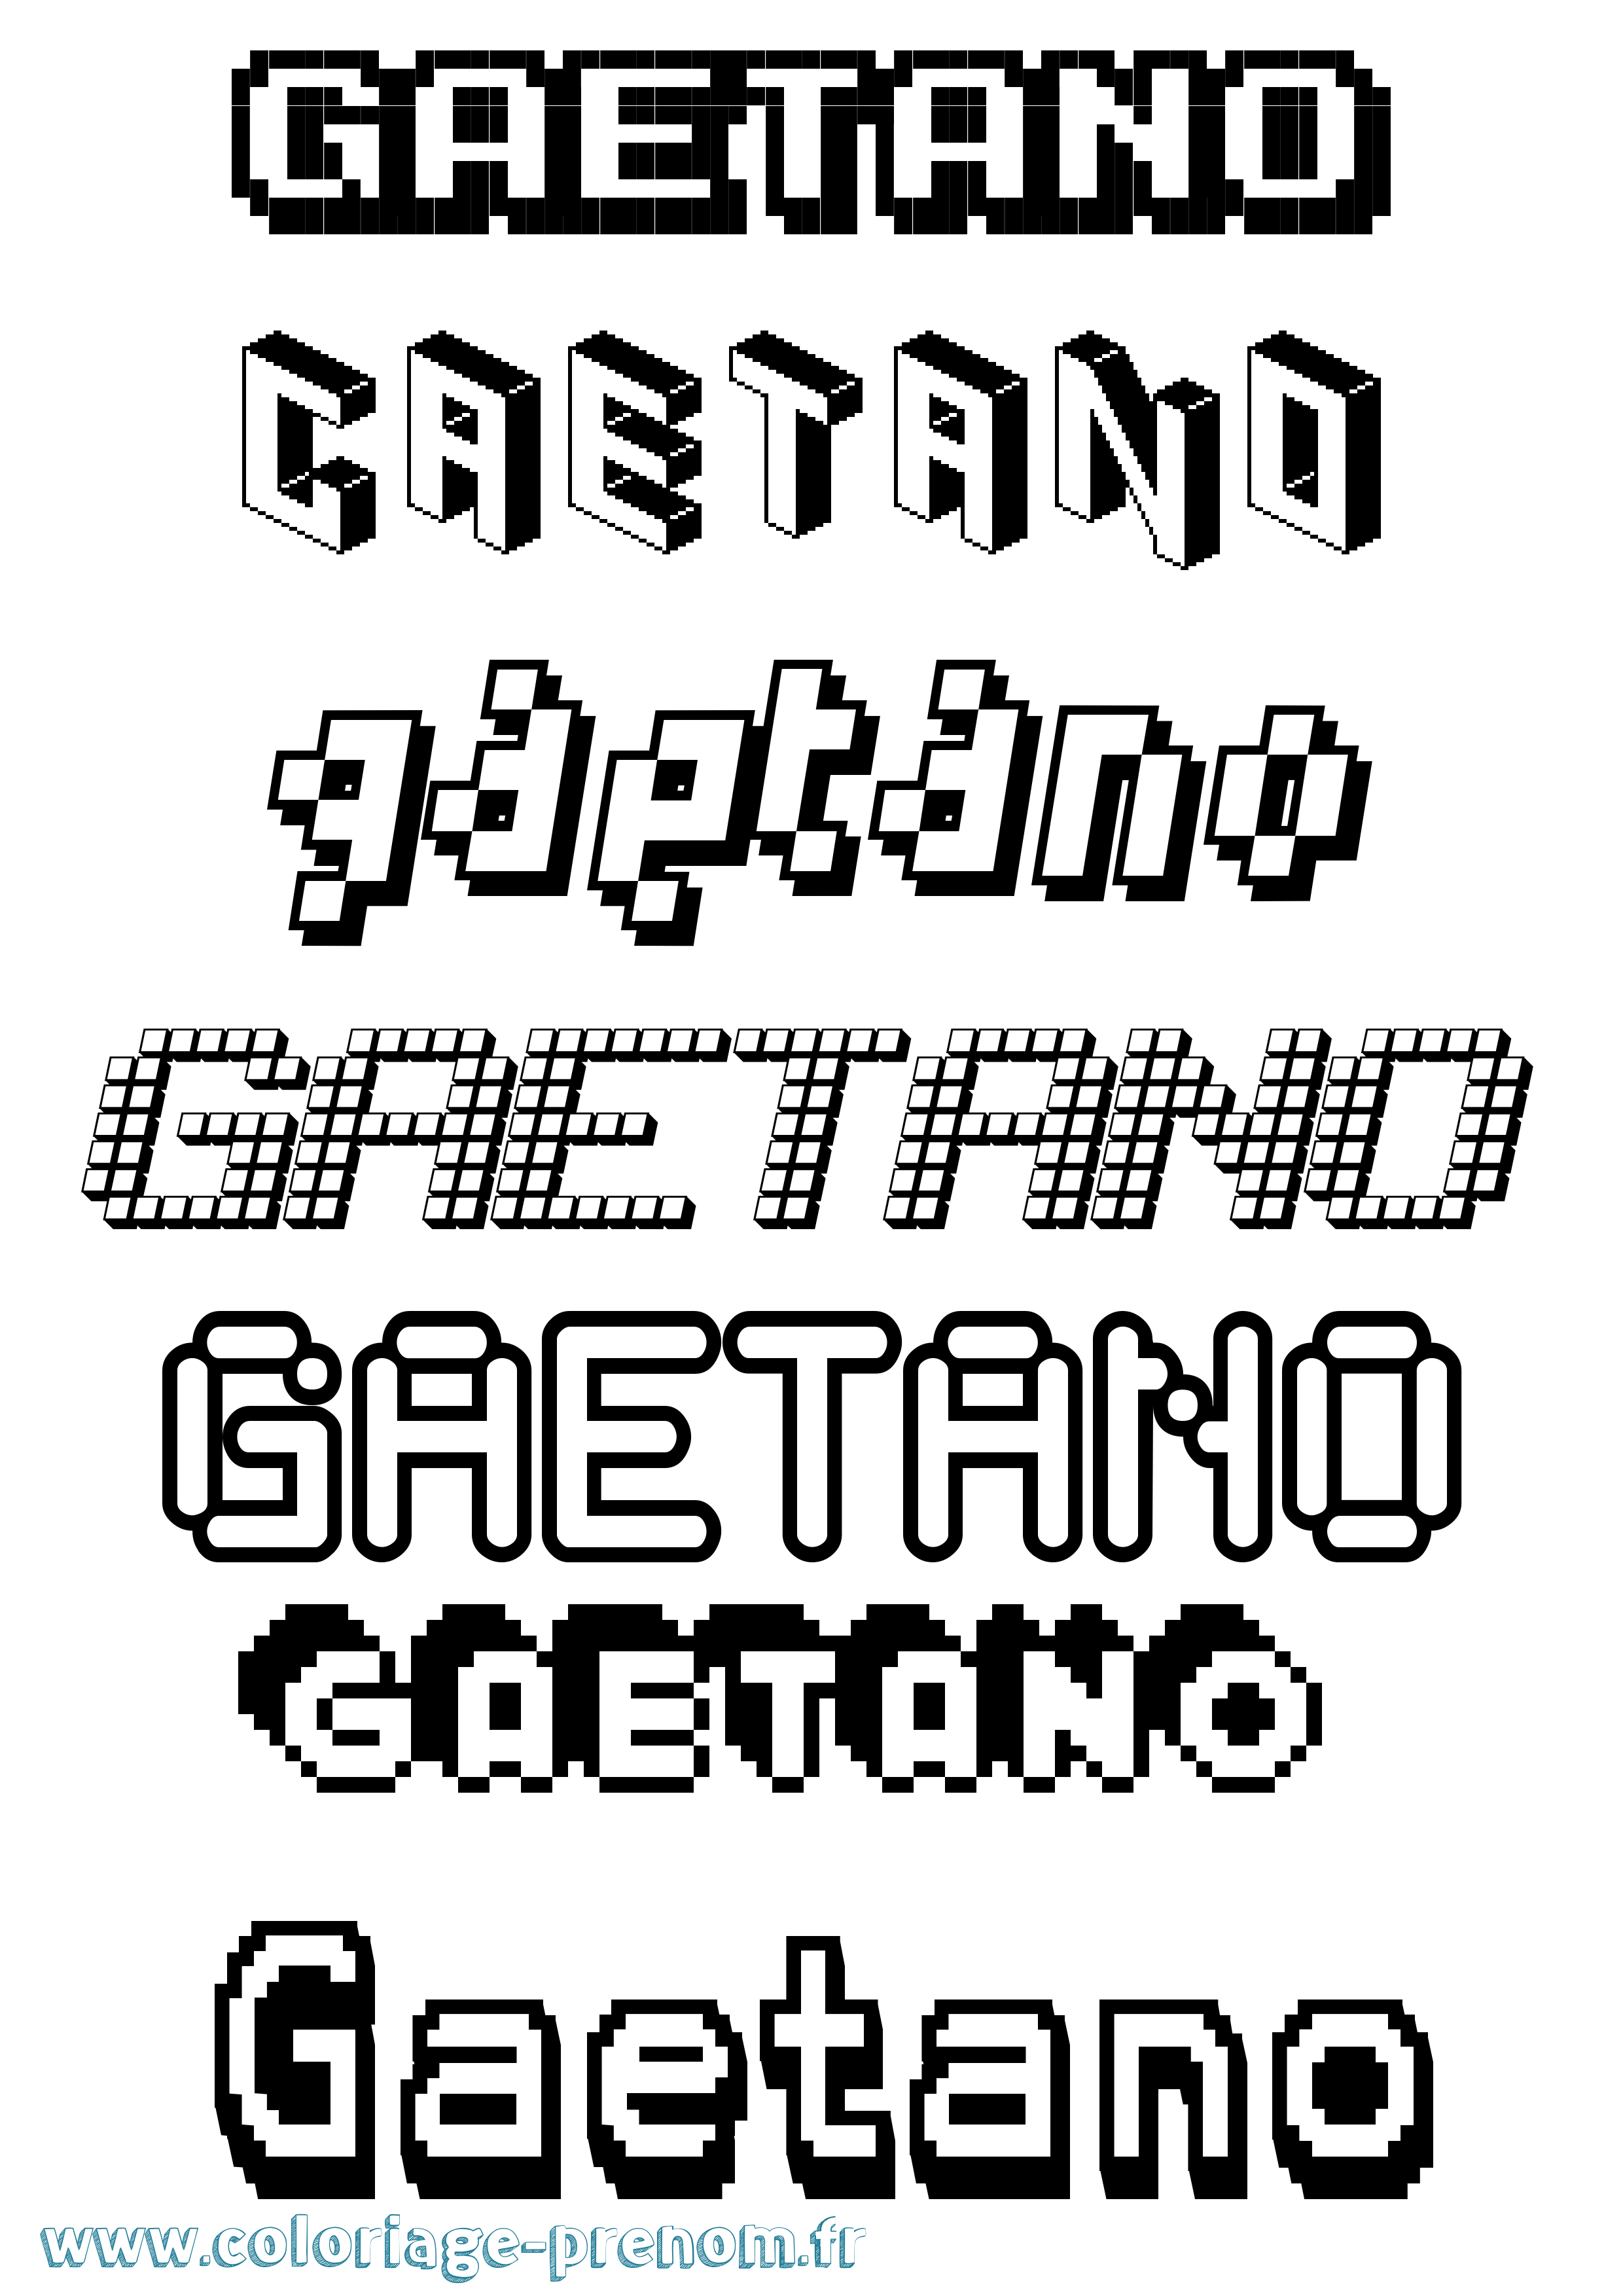 Coloriage prénom Gaetano Pixel